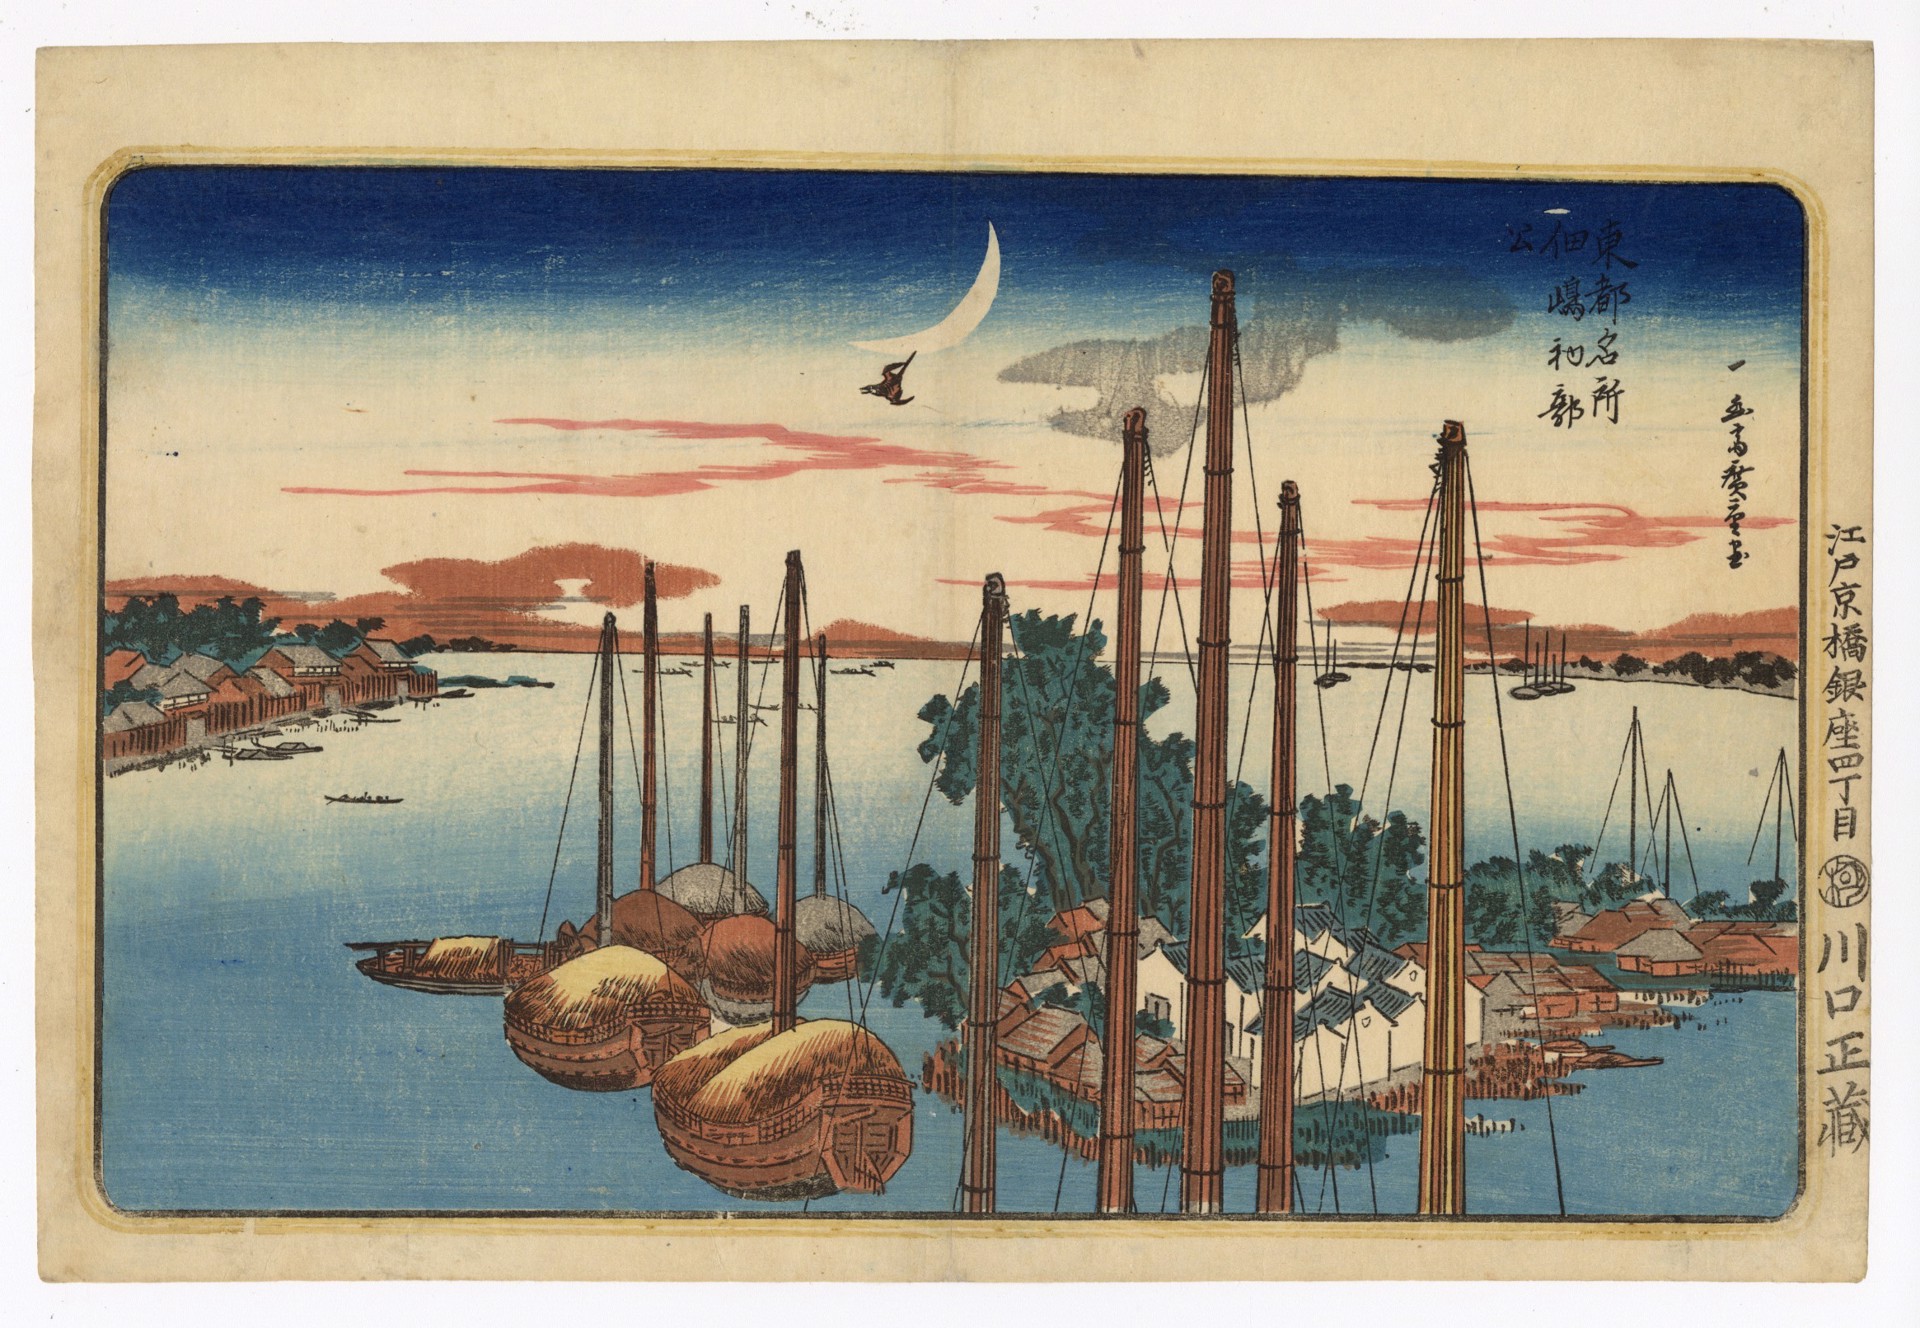 First Cuckoo of the Year at Tsukusajima by Hiroshige